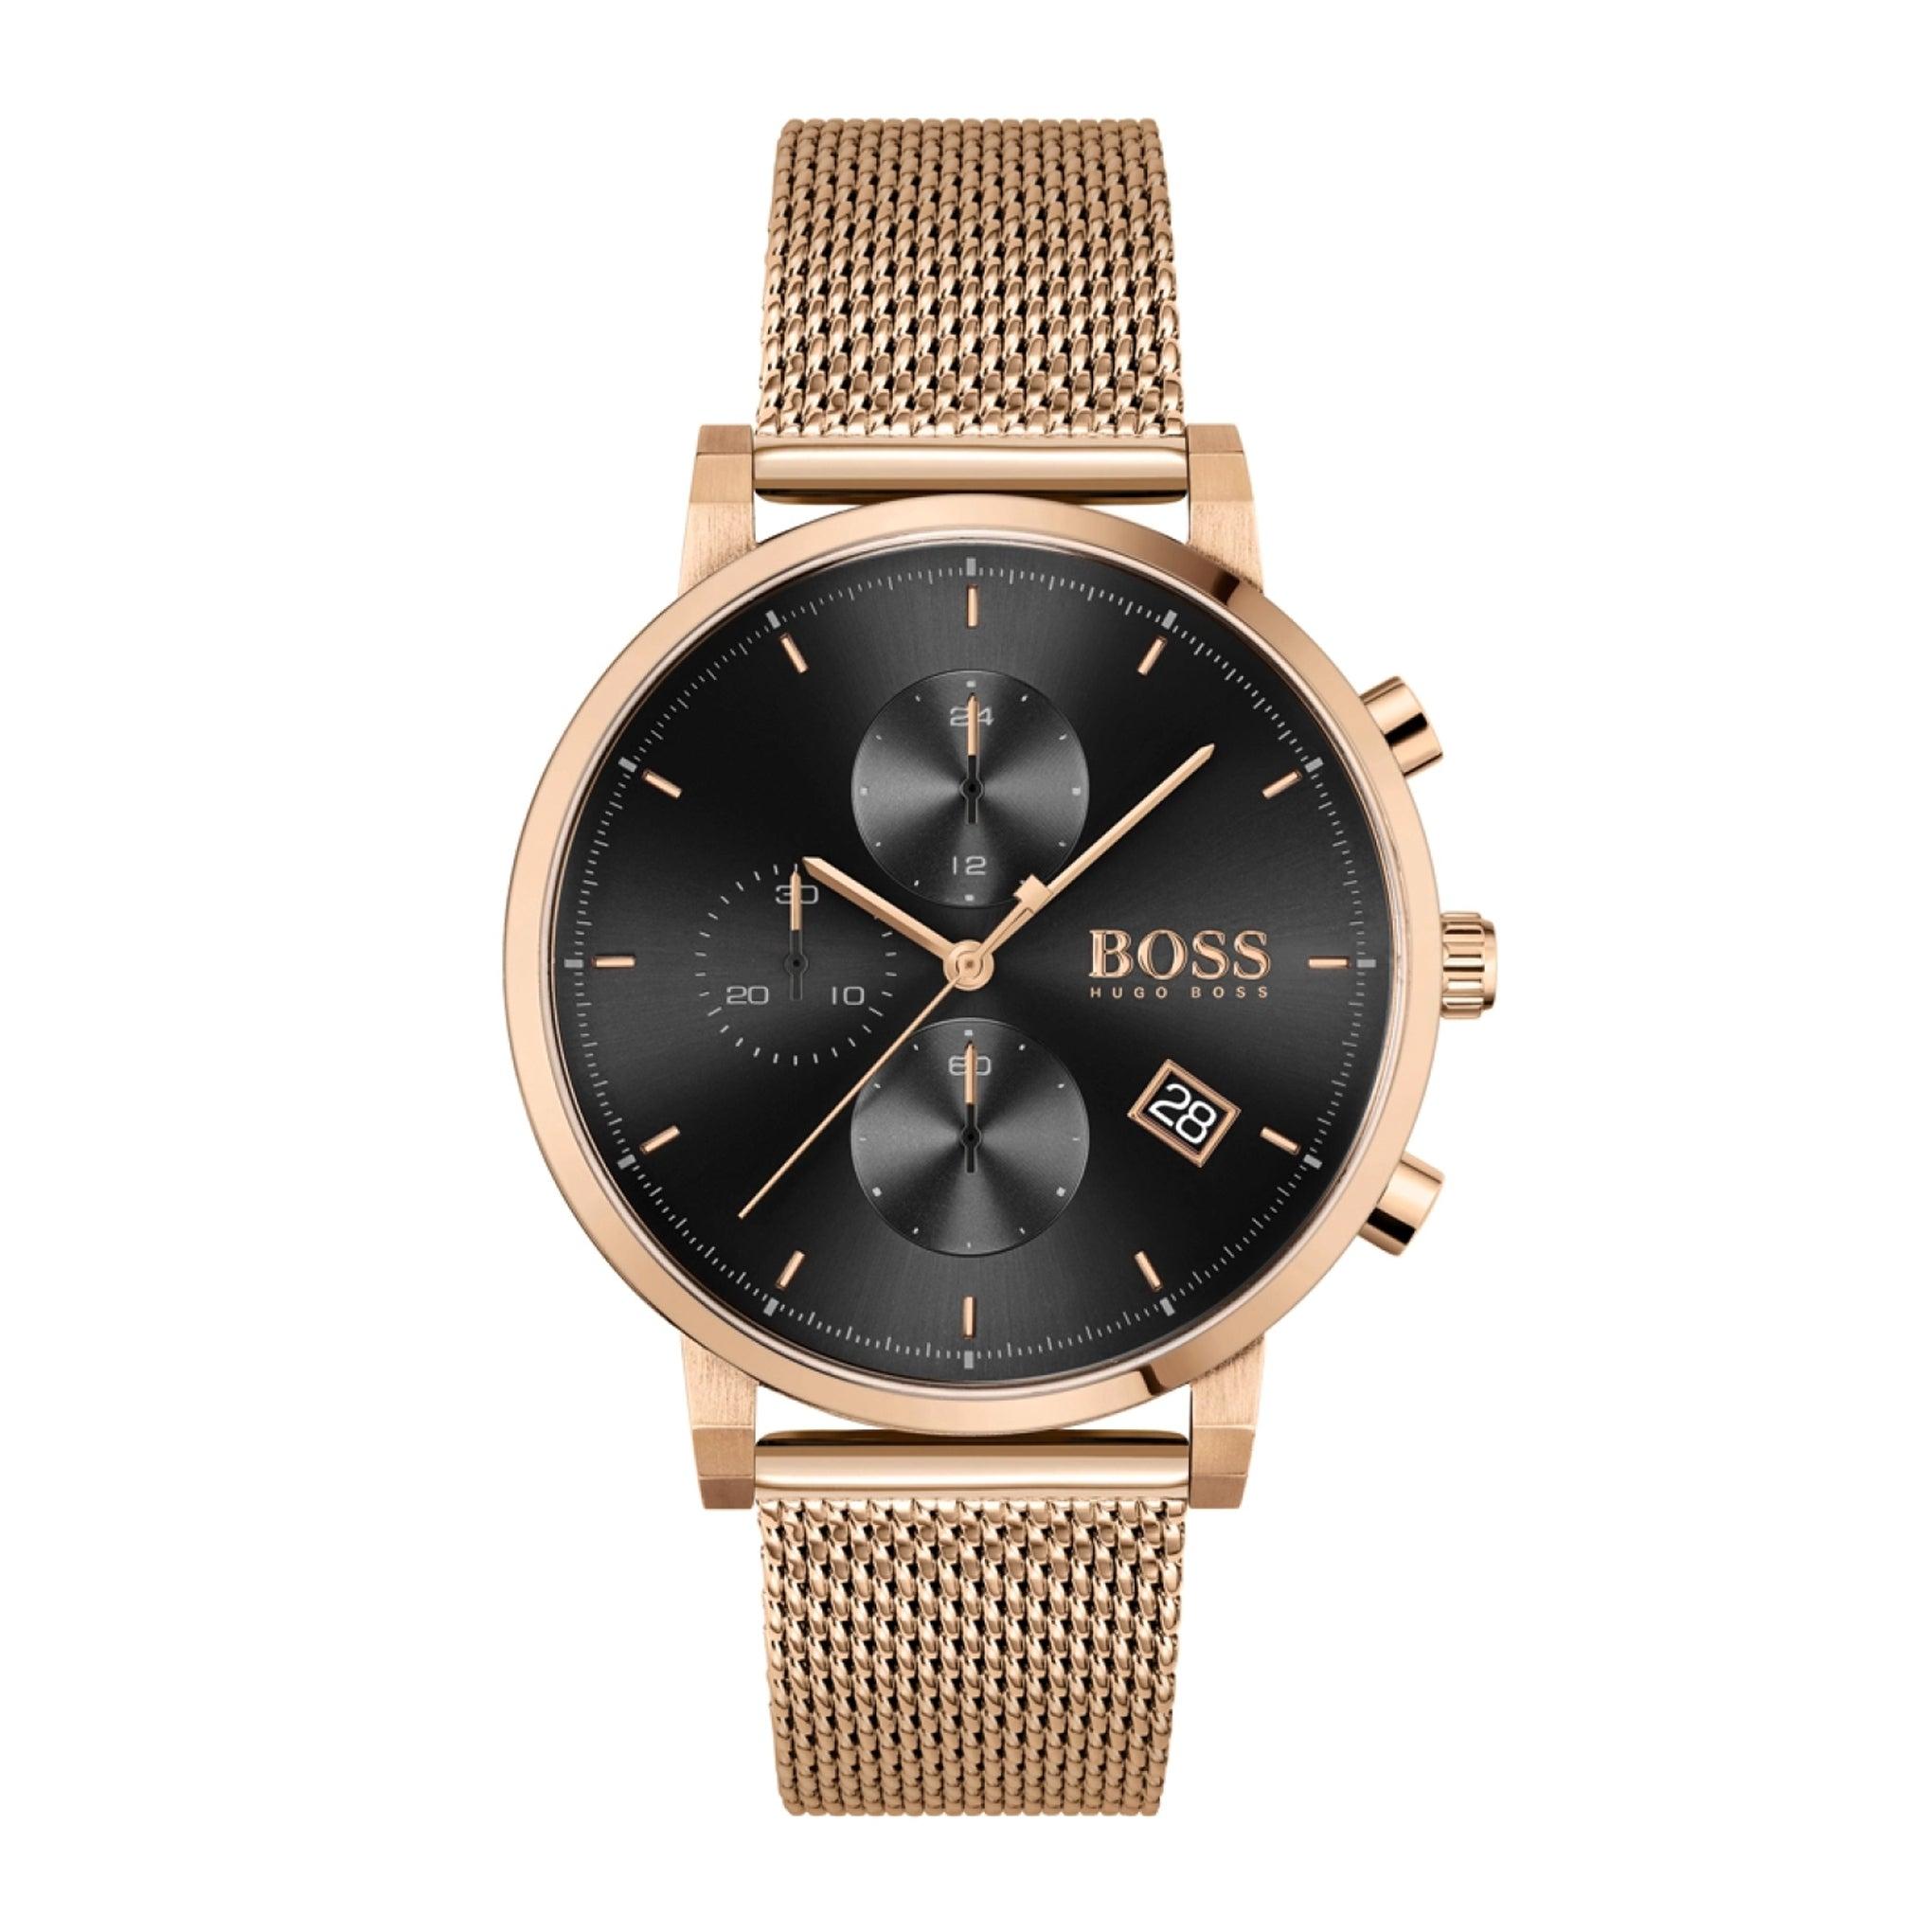 ساعة يد رجالية - ذهبي وردي- بحزام معدني مقاوم للصدأ هوغو بوس Hugo Boss Men's Integrity Black Dial Stainless Steel Quartz Watch